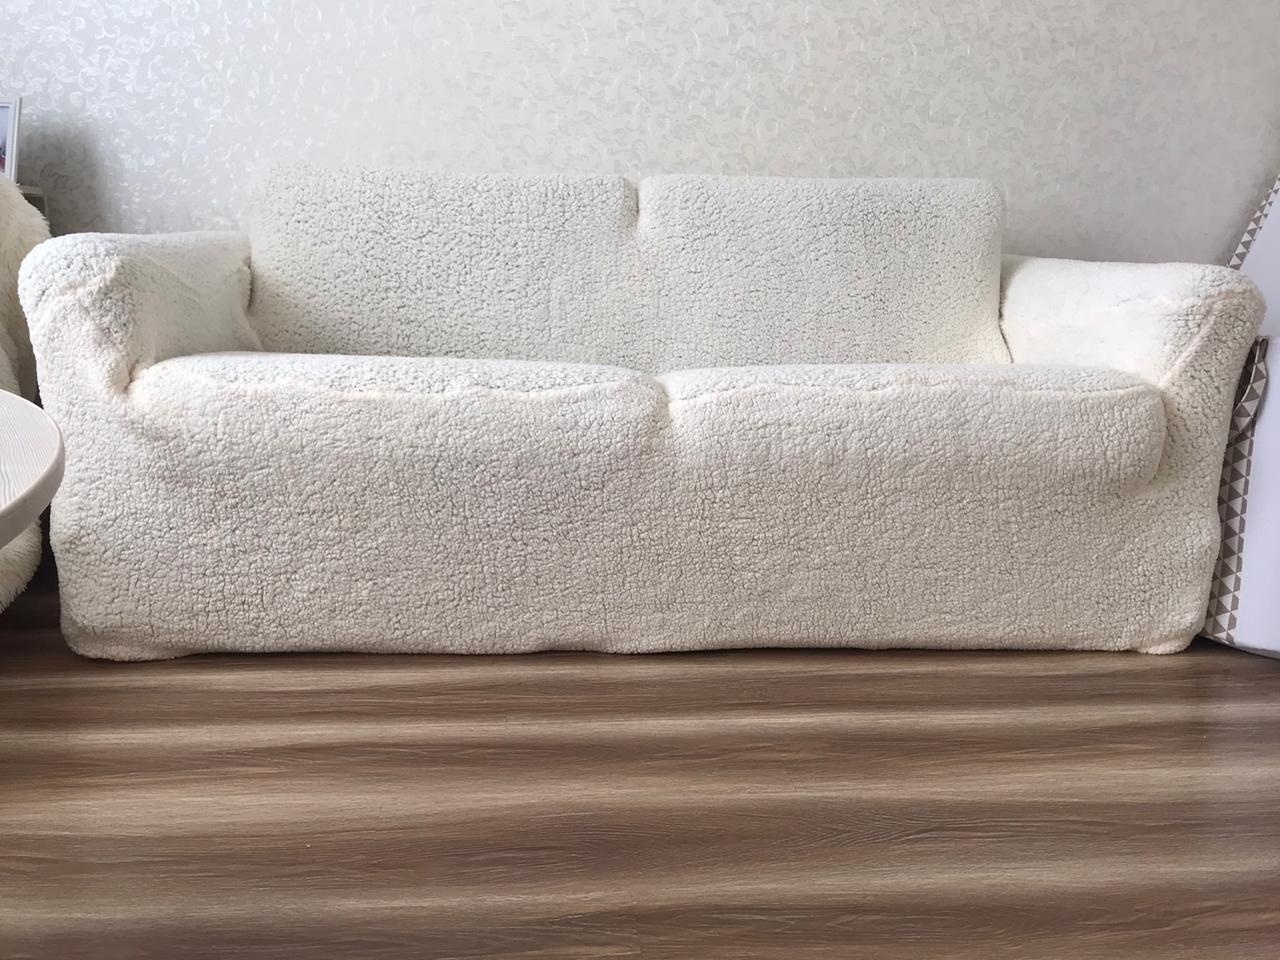 белая меховая накидка на диван